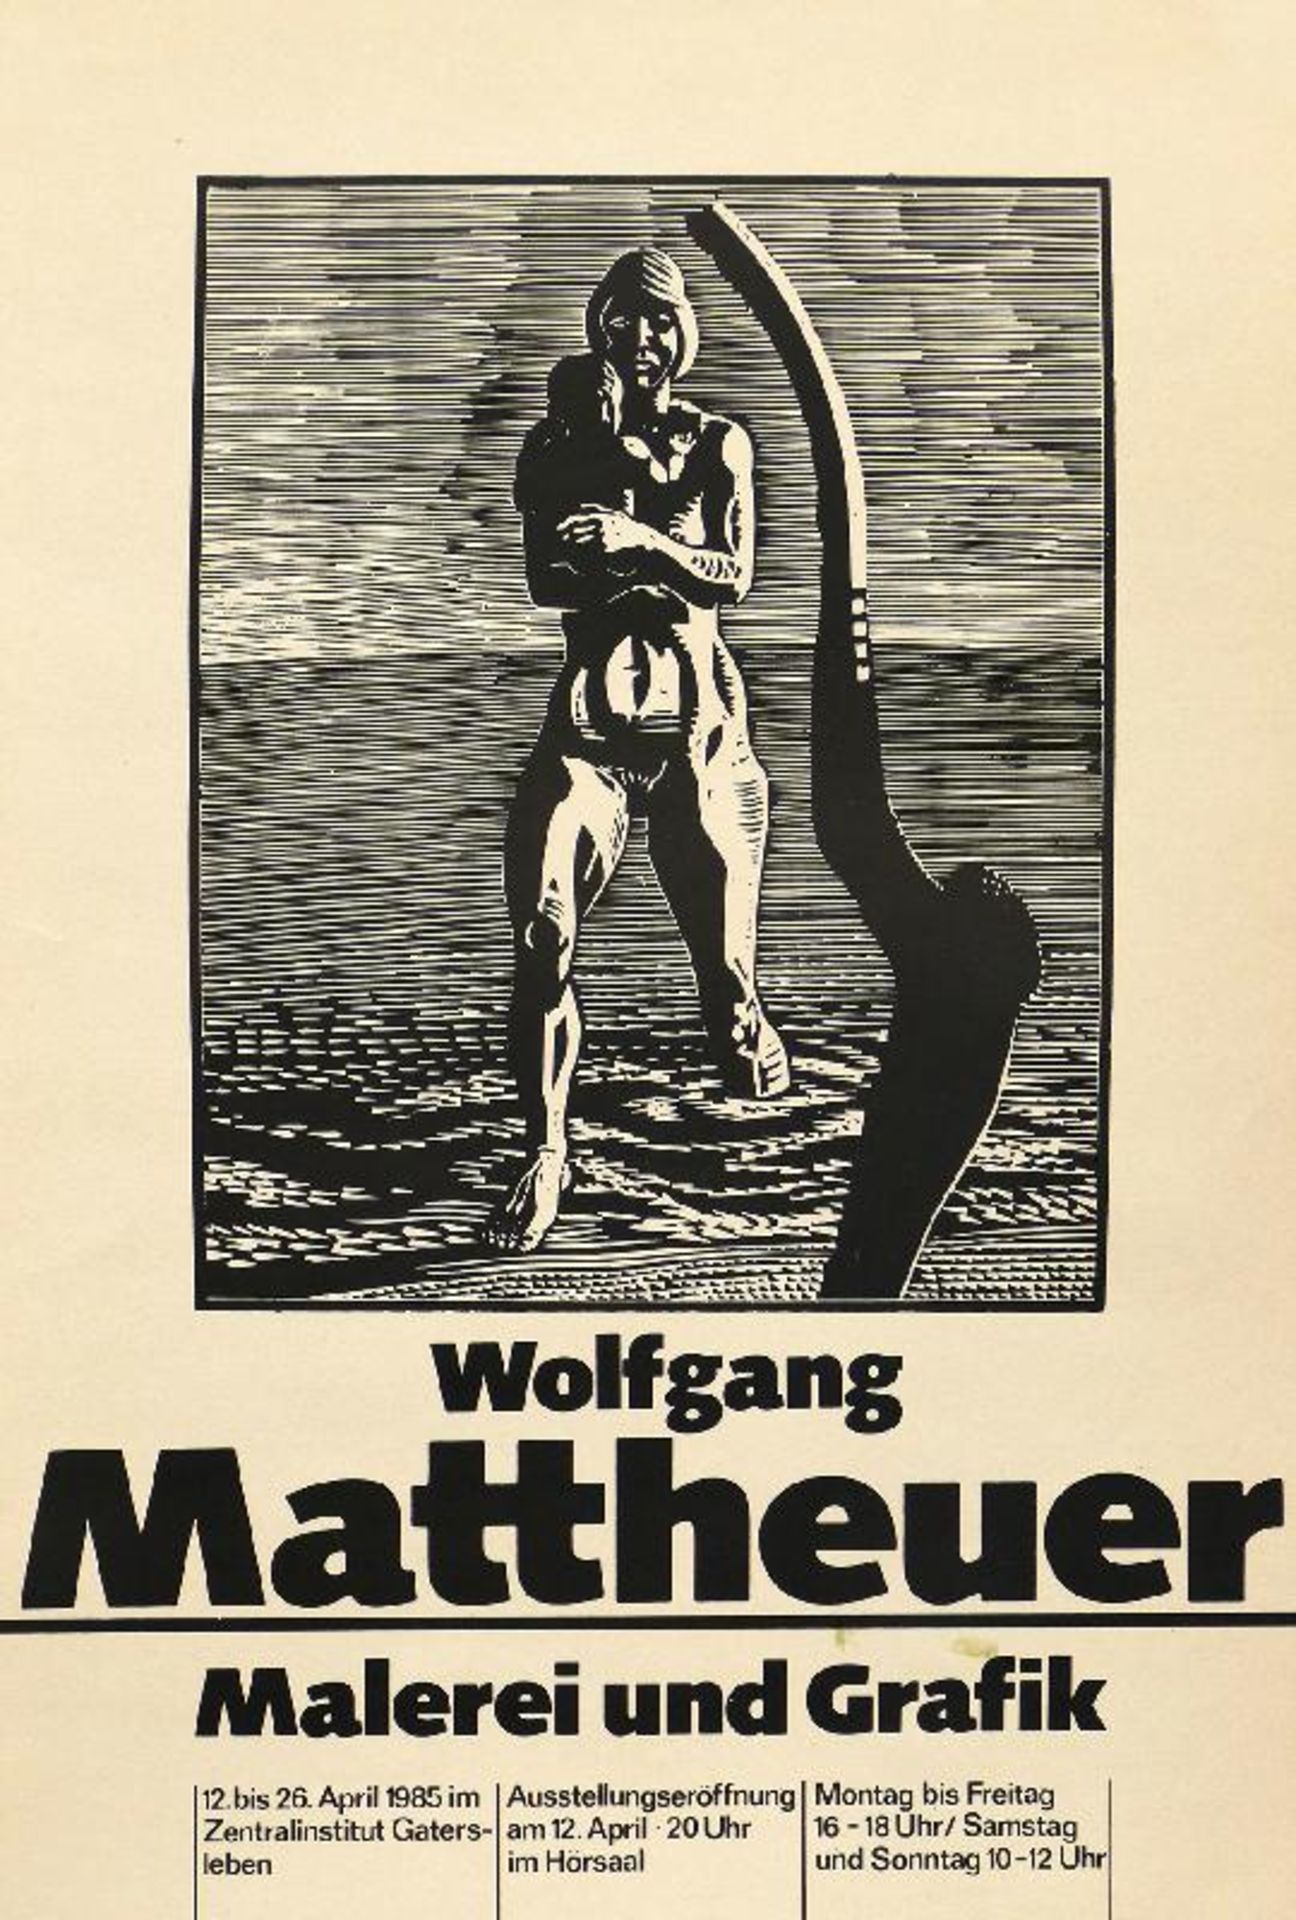 Mattheuer, Wolfgang - Hinter den sieben Bergen - Image 5 of 6